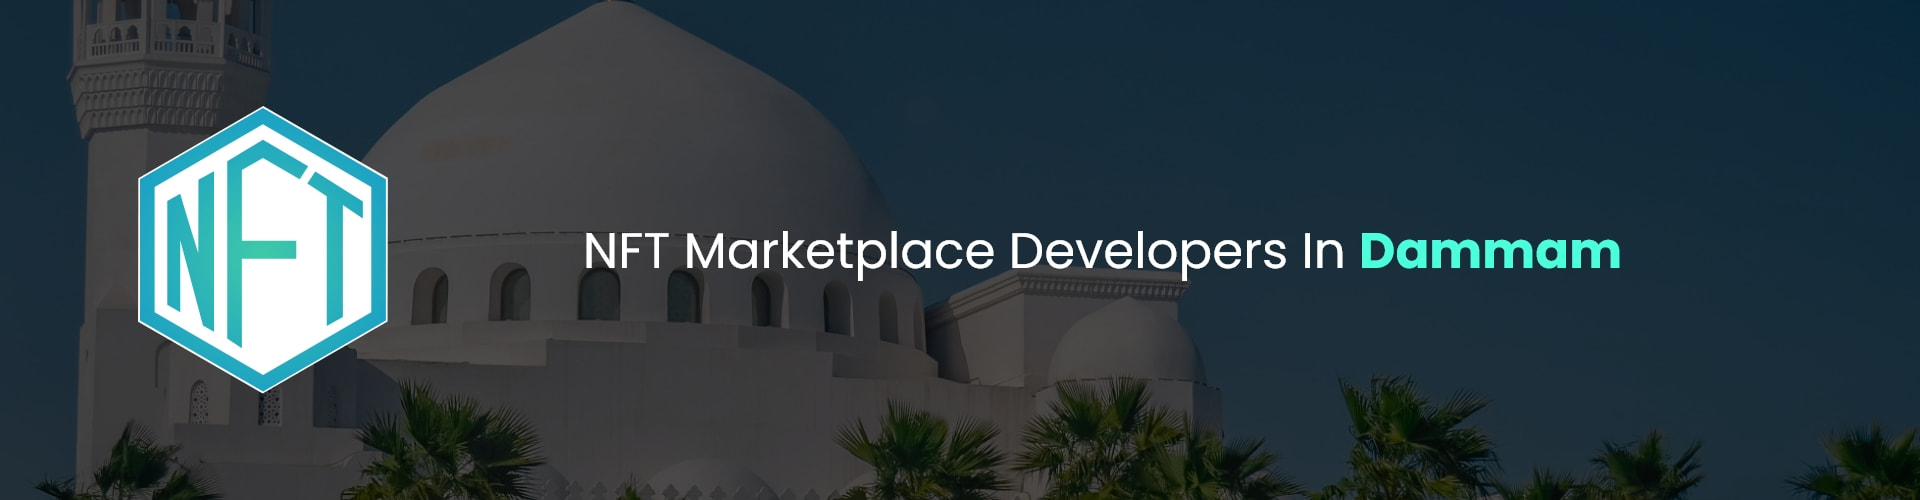 hire nft marketplace developers in Dammam